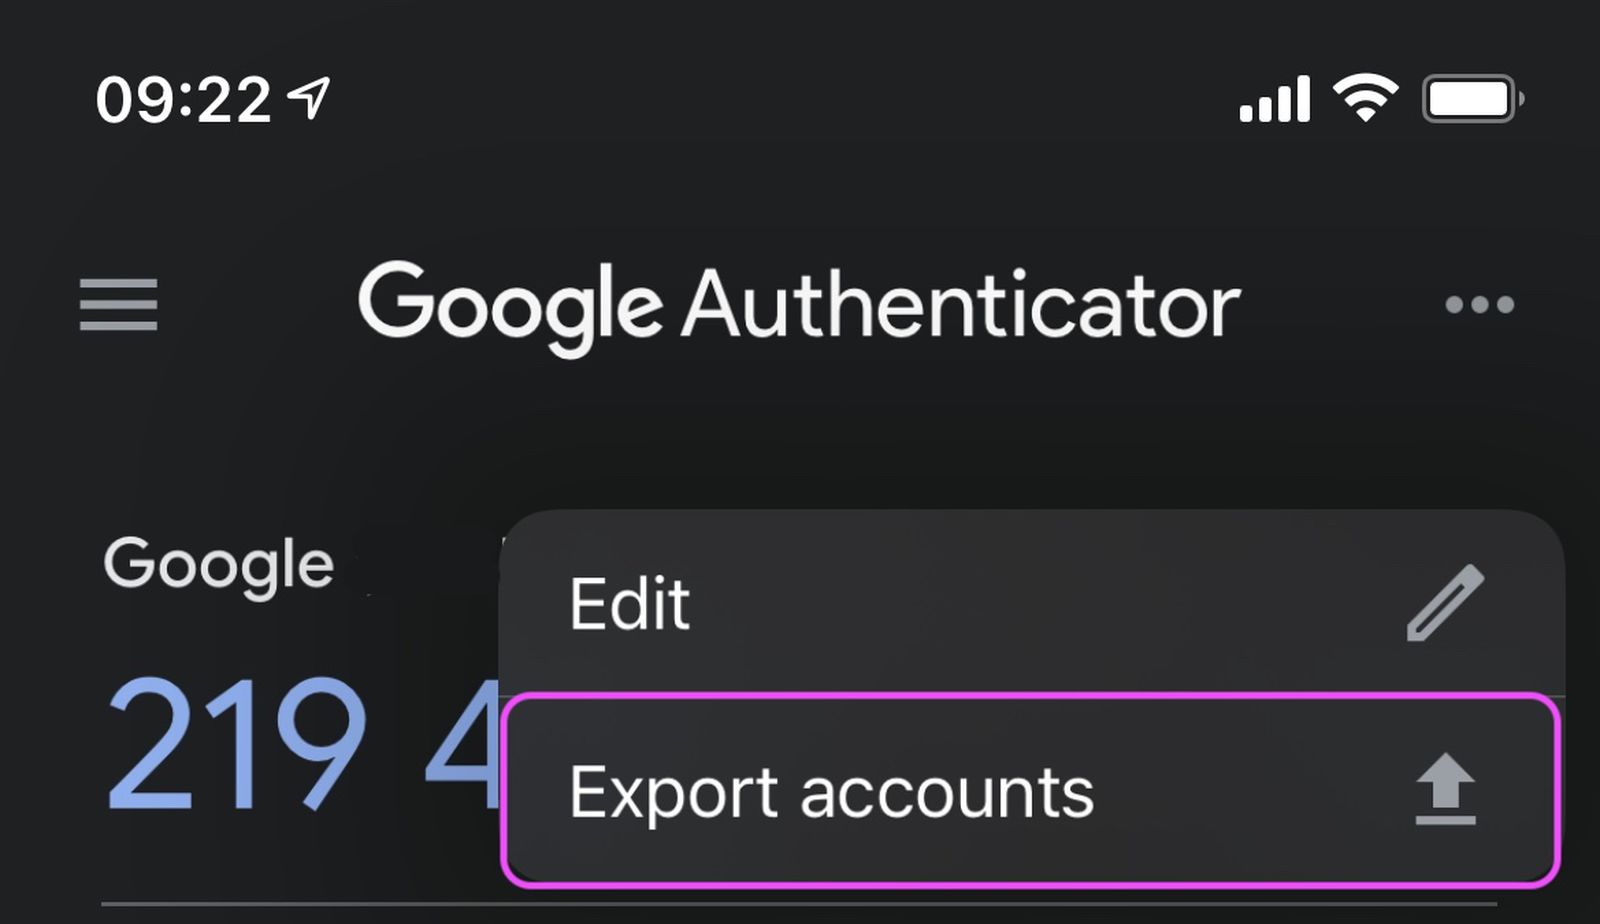 Google Authenticator iOS App Gains New Export Accounts Option